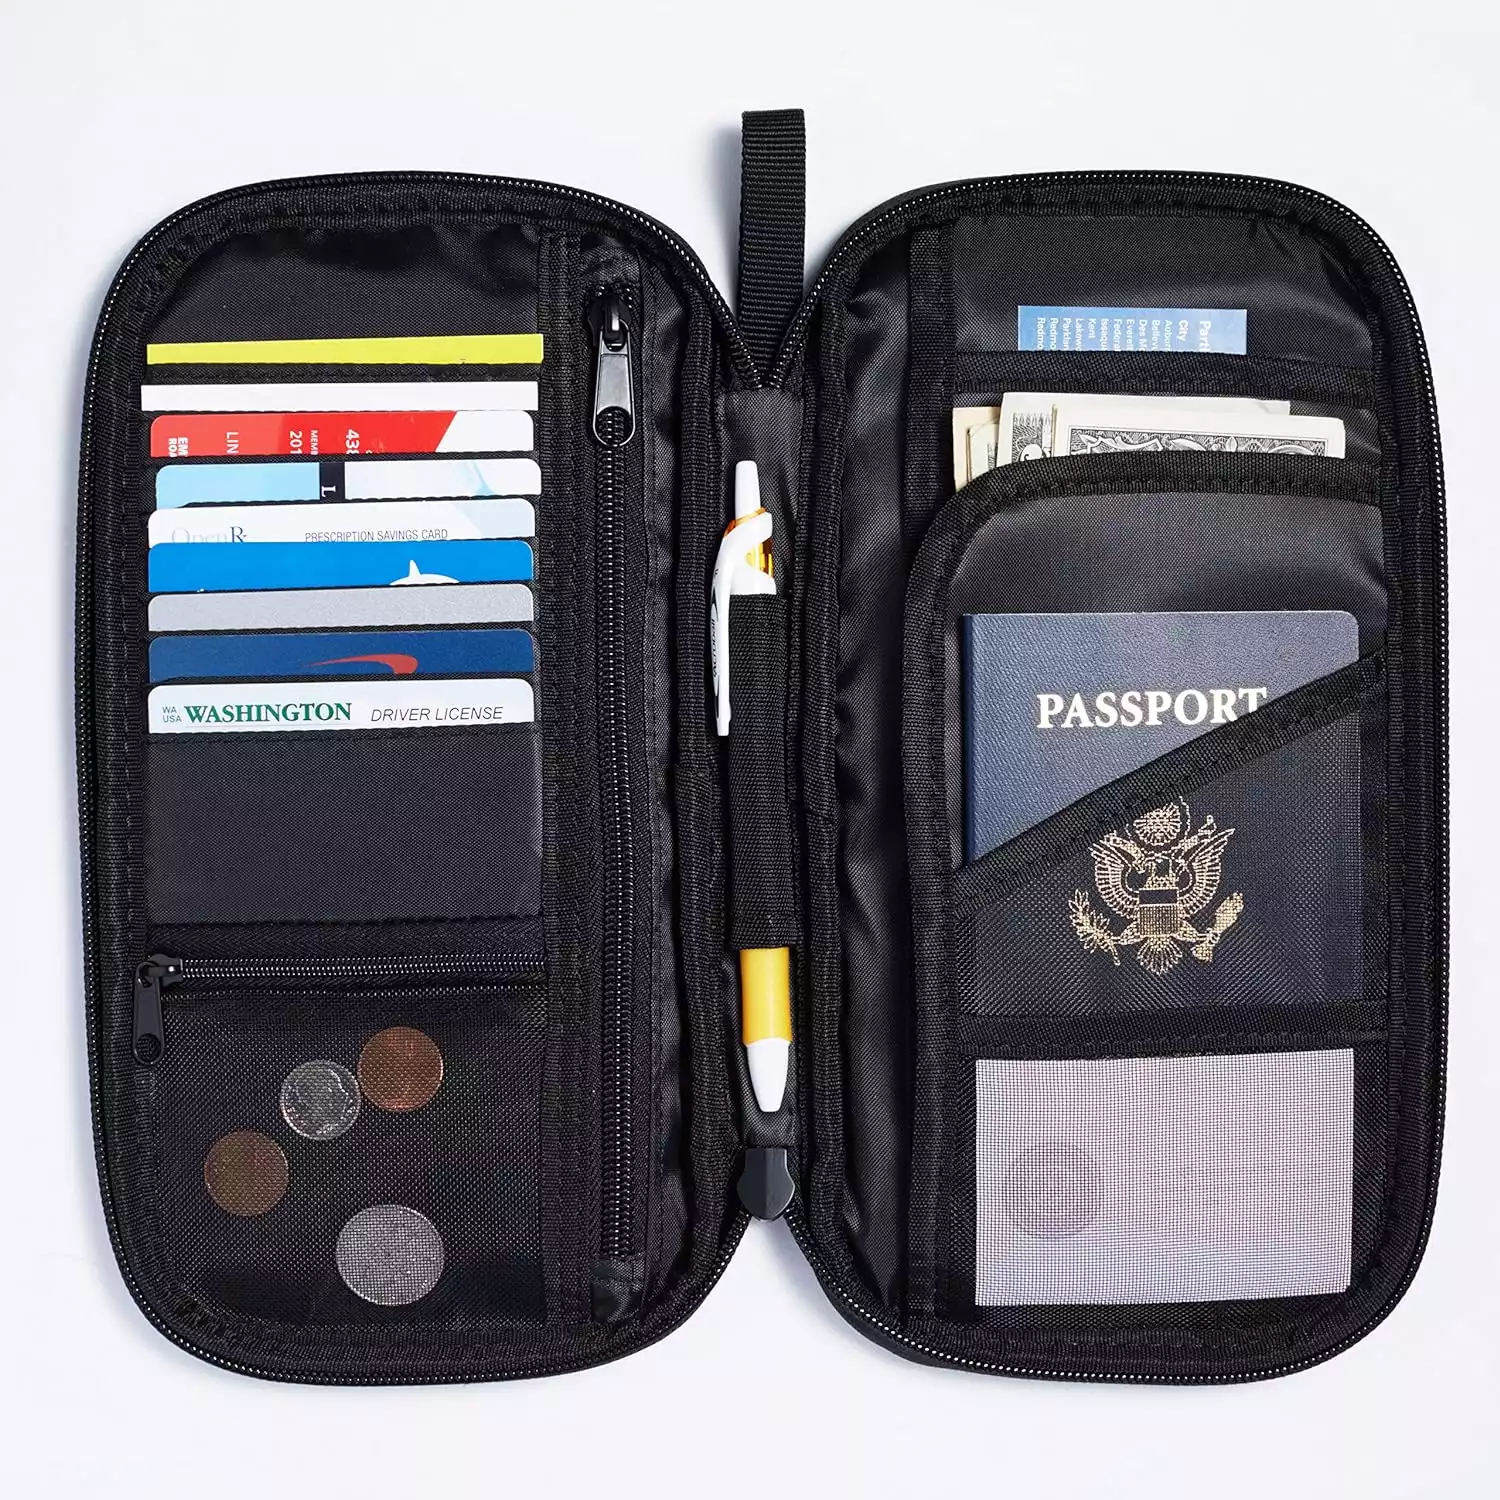 Amazon Basics RFID Travel Passport Organizer